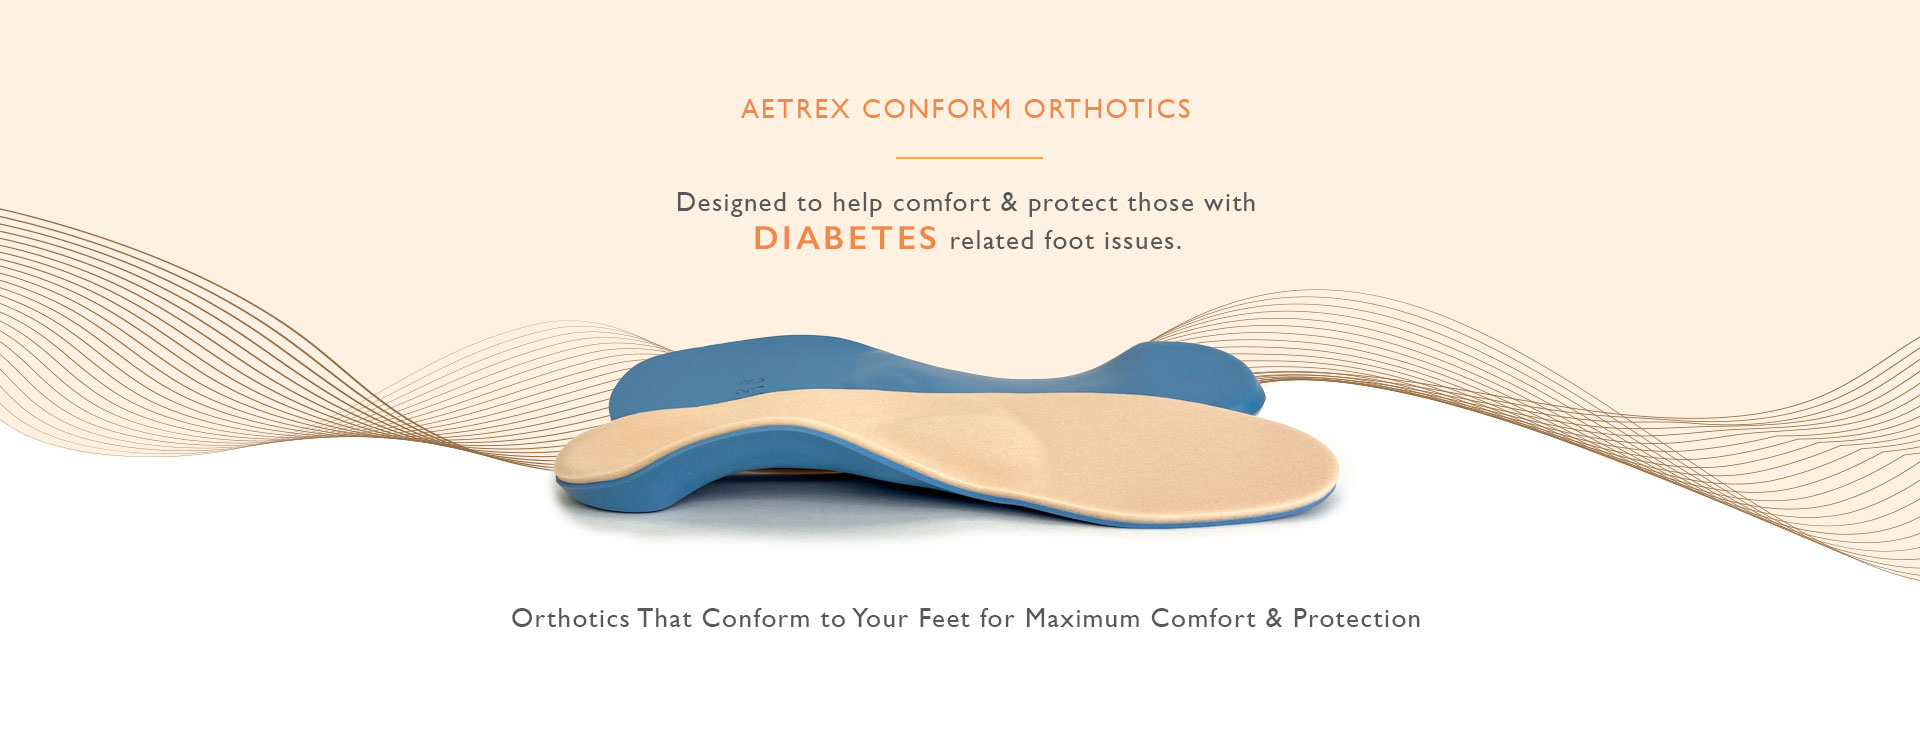 Aetrex Conform Orthotics for Diabetics